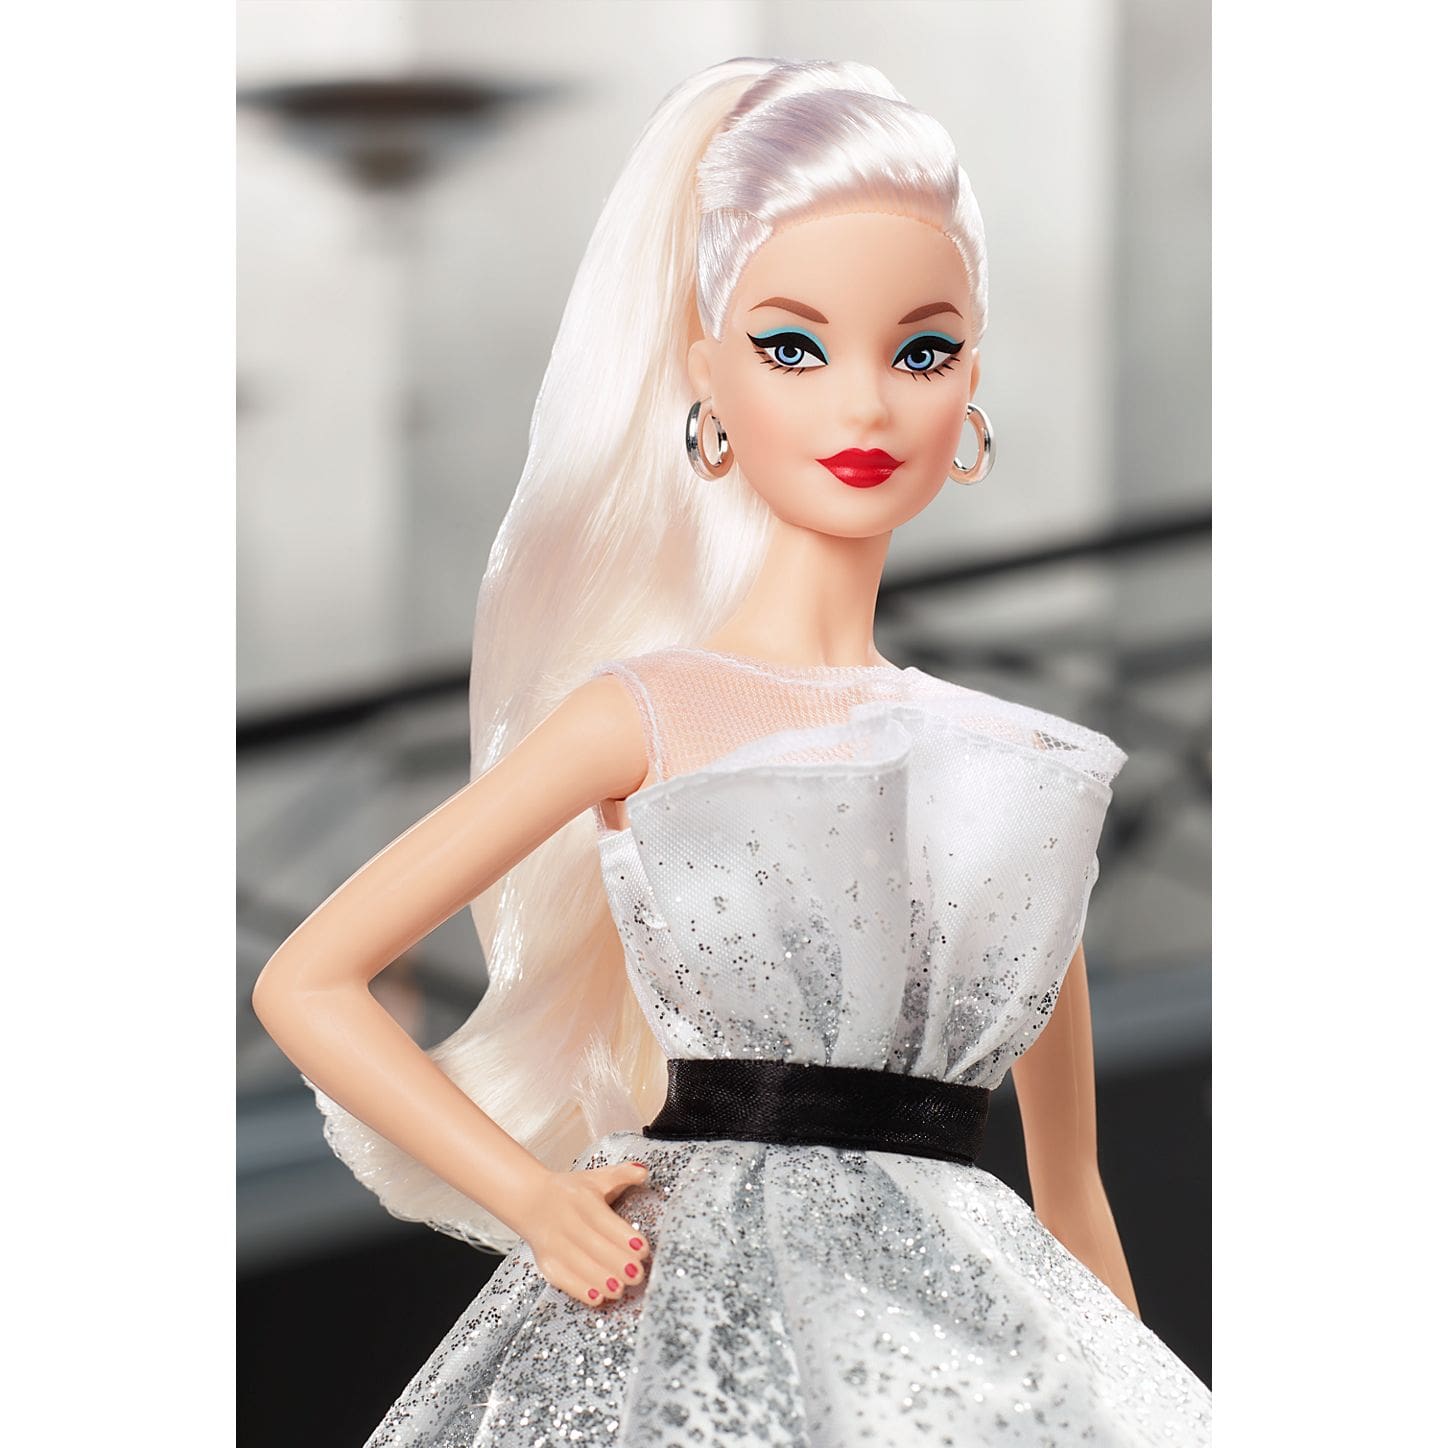 60th anniversary of barbie